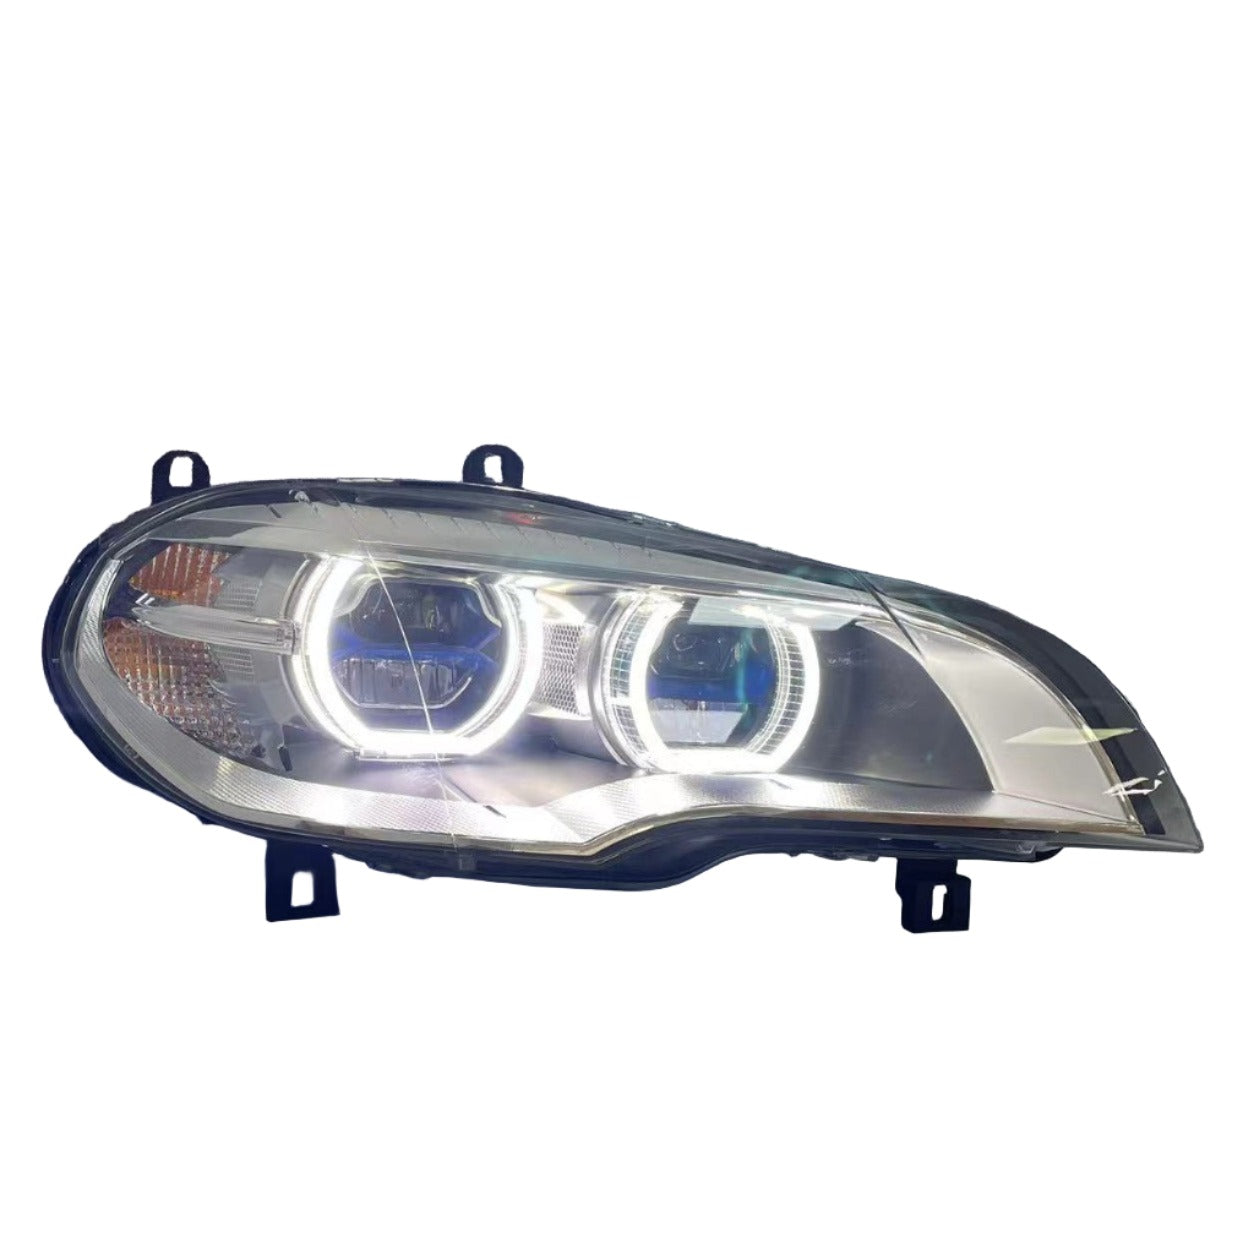 E70 X5 Facelift Style LED Headlights